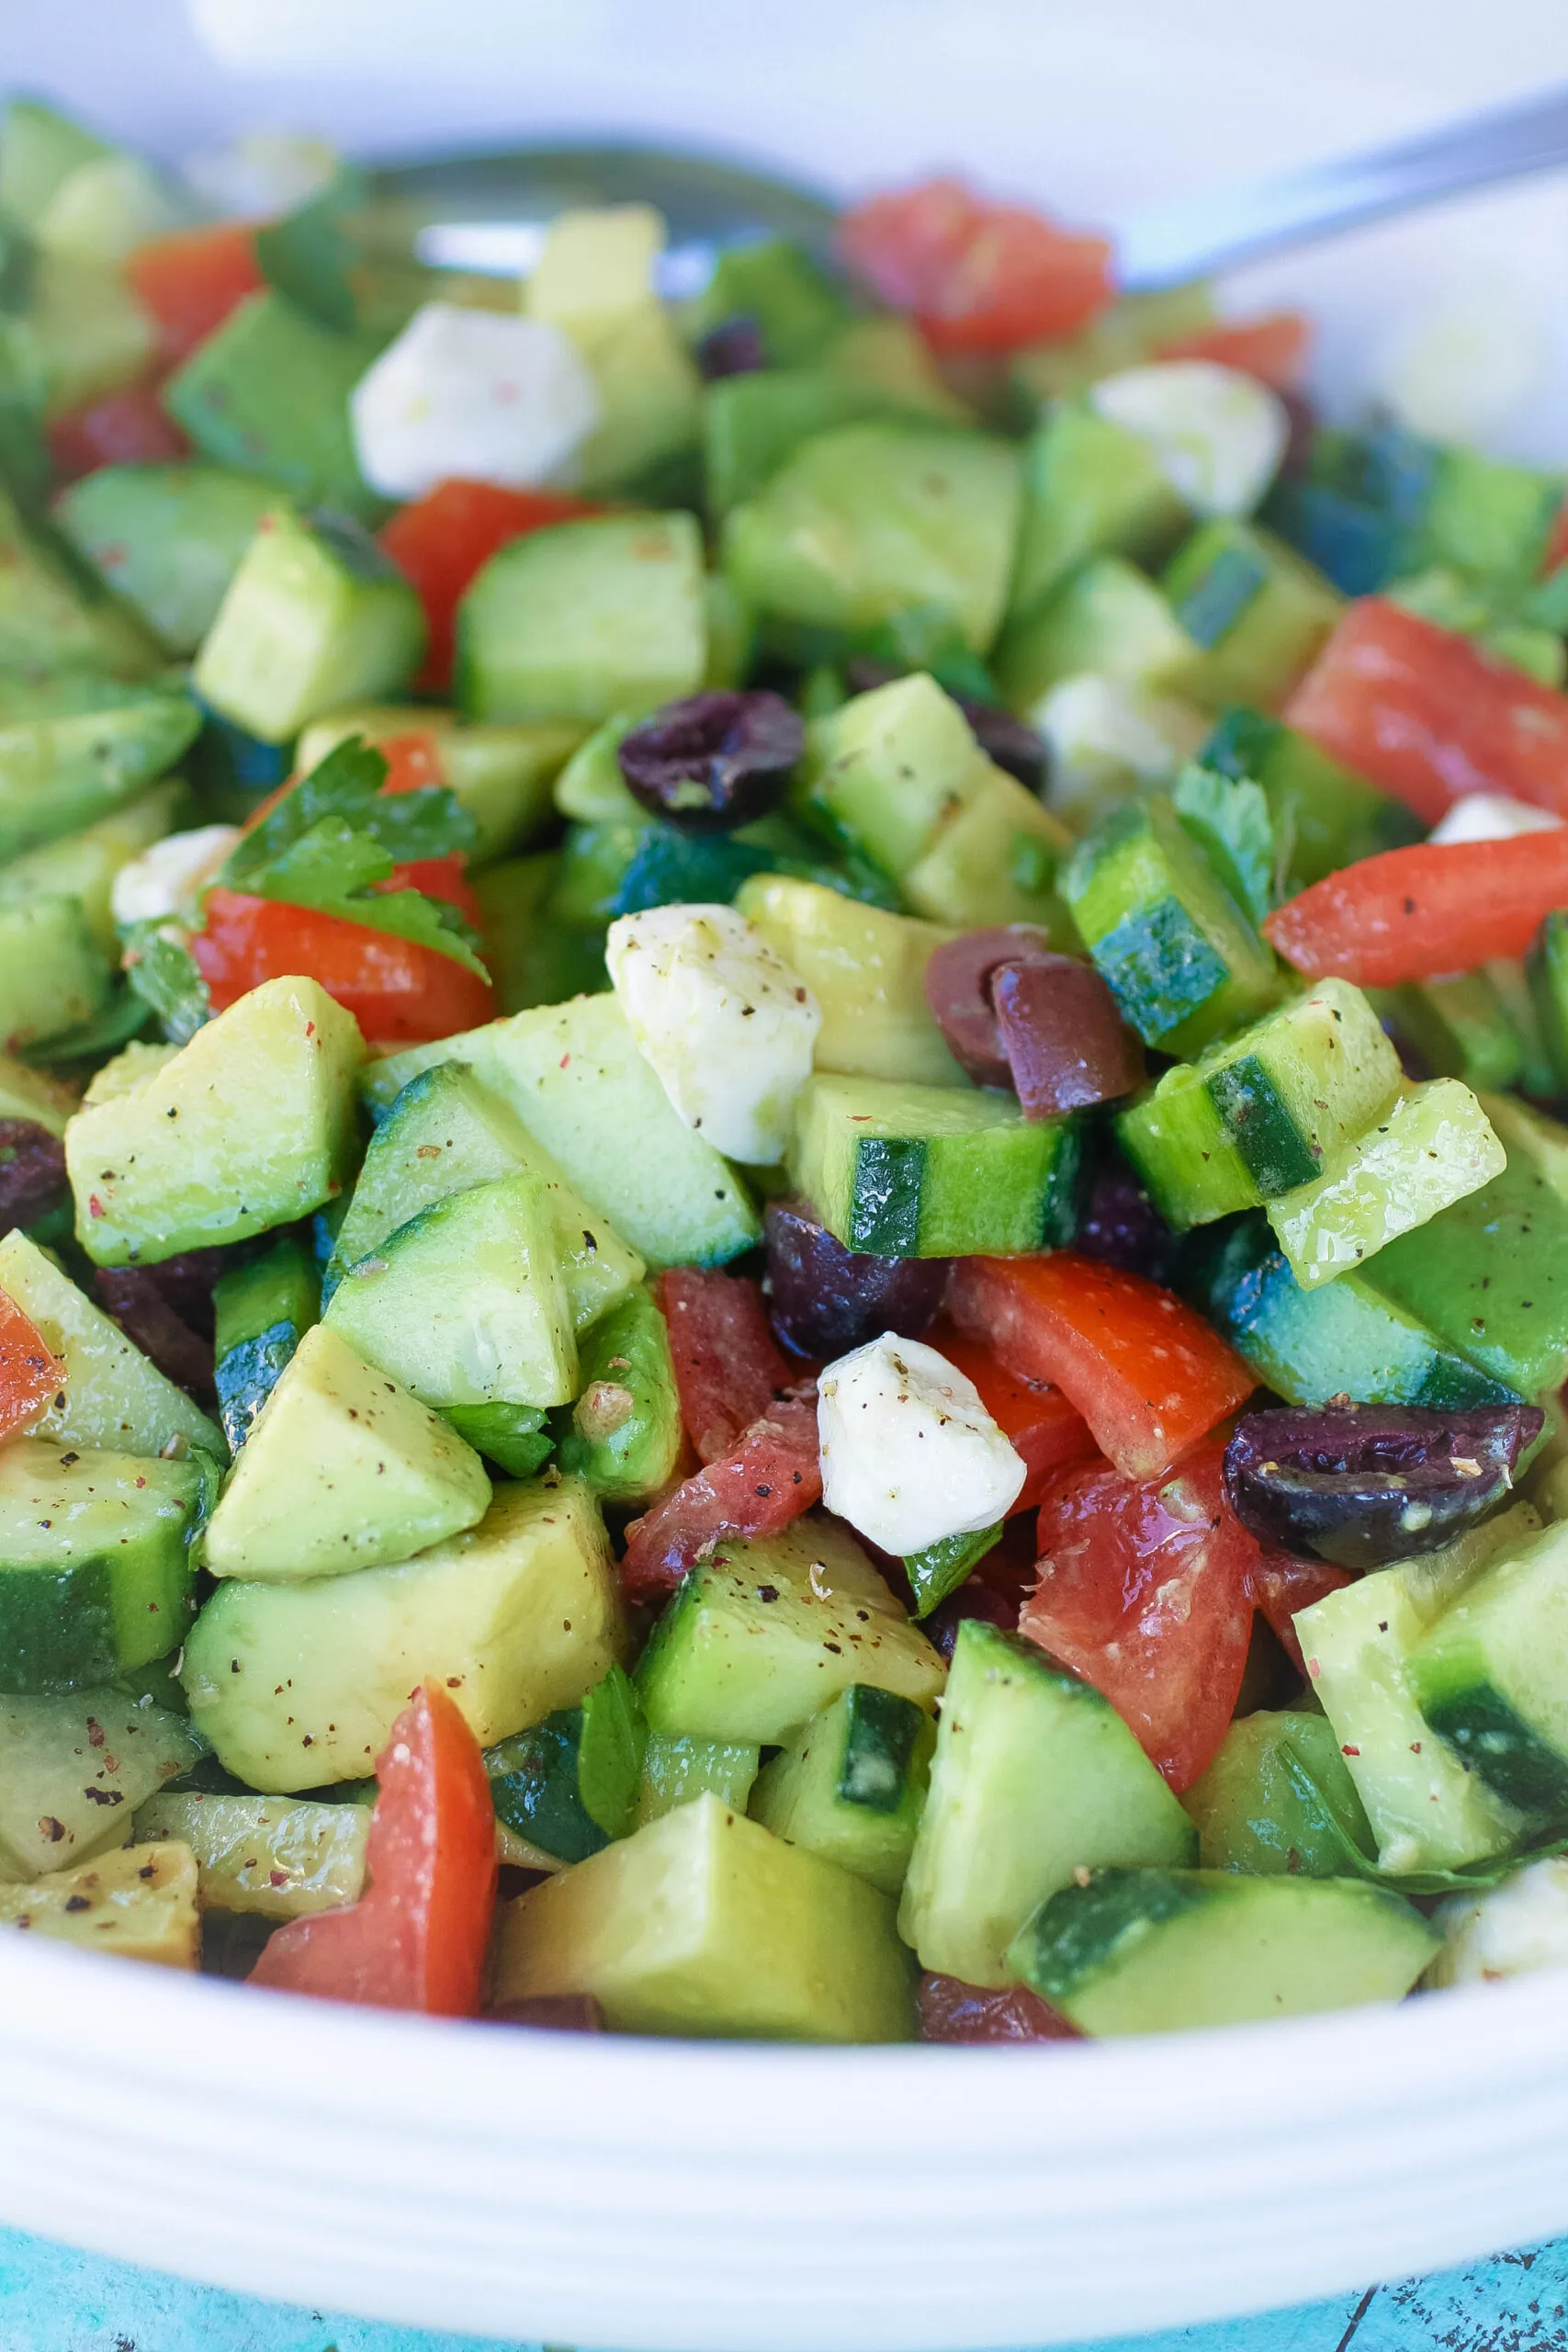 Cucumber salad with lemony dressing is a dreamy dish of fresh veggies!